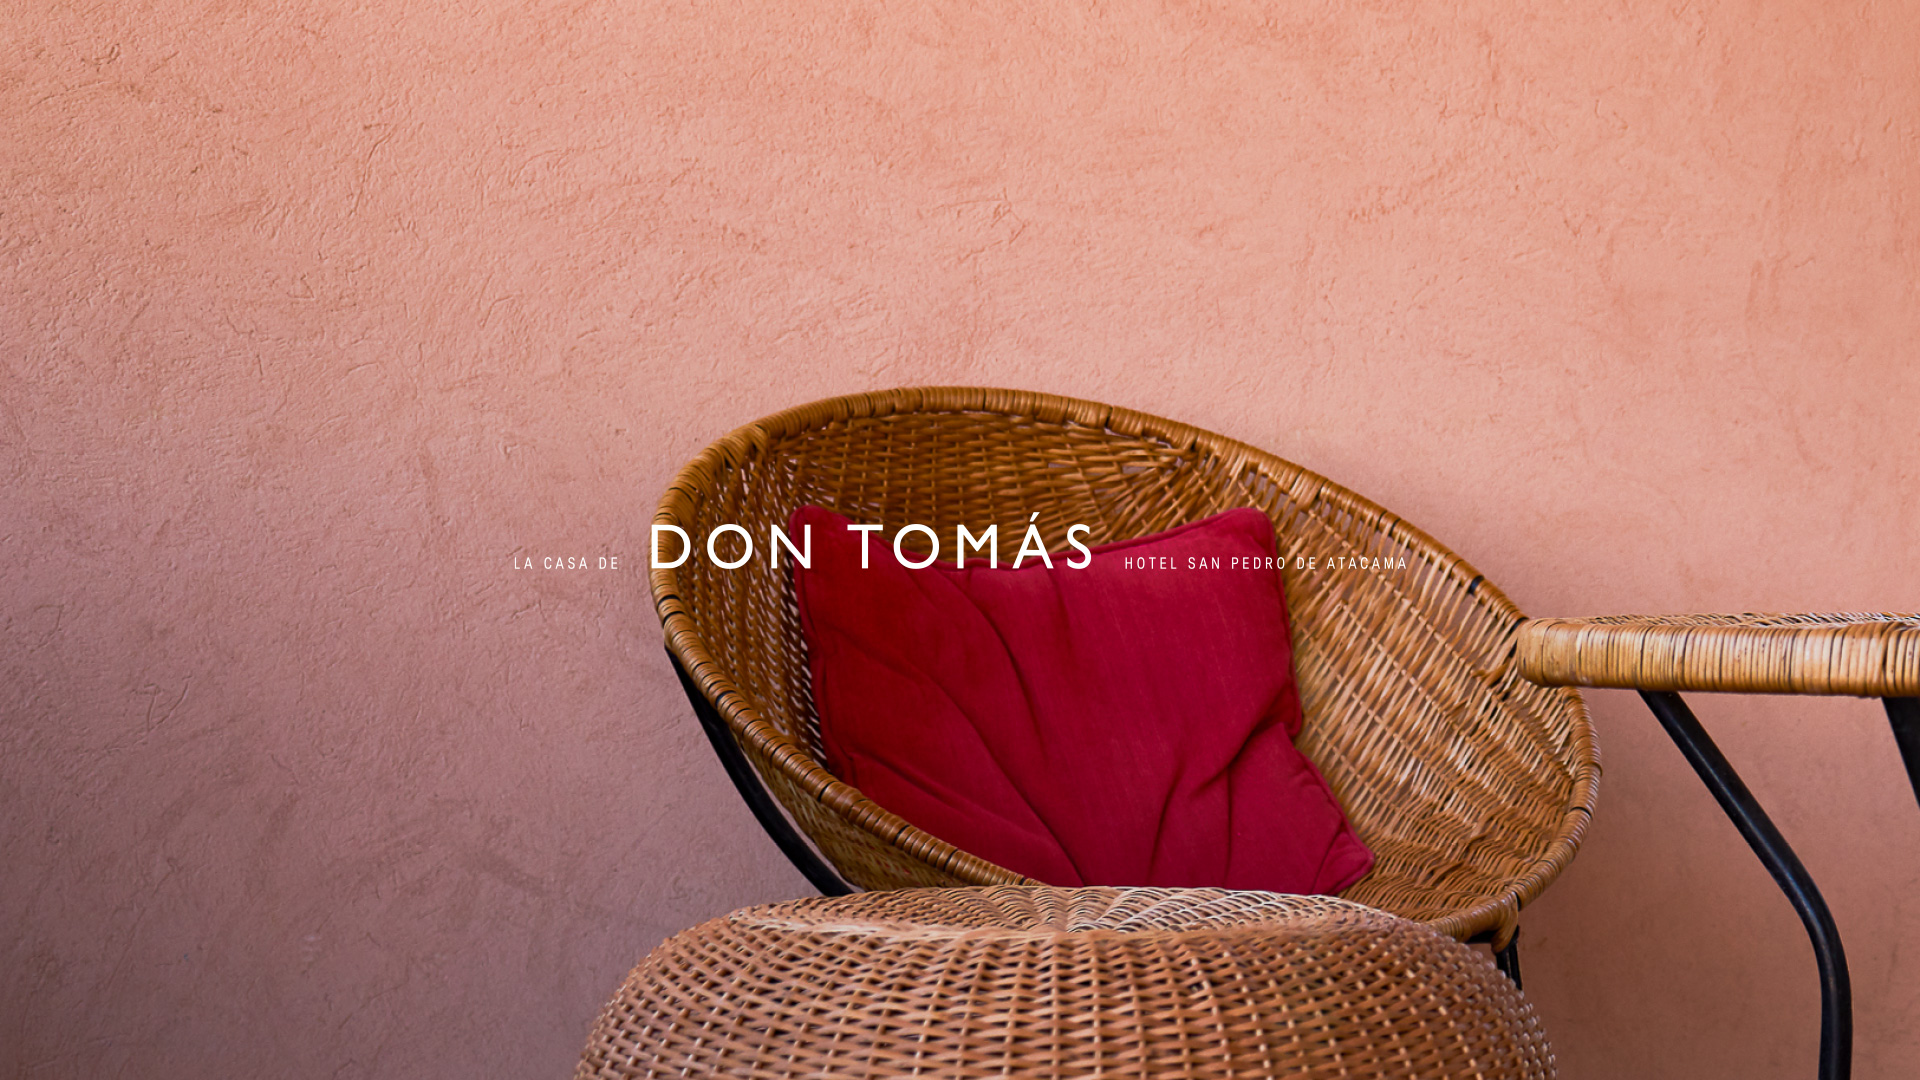 Fotografia Hotel La casa de don tomas con texto